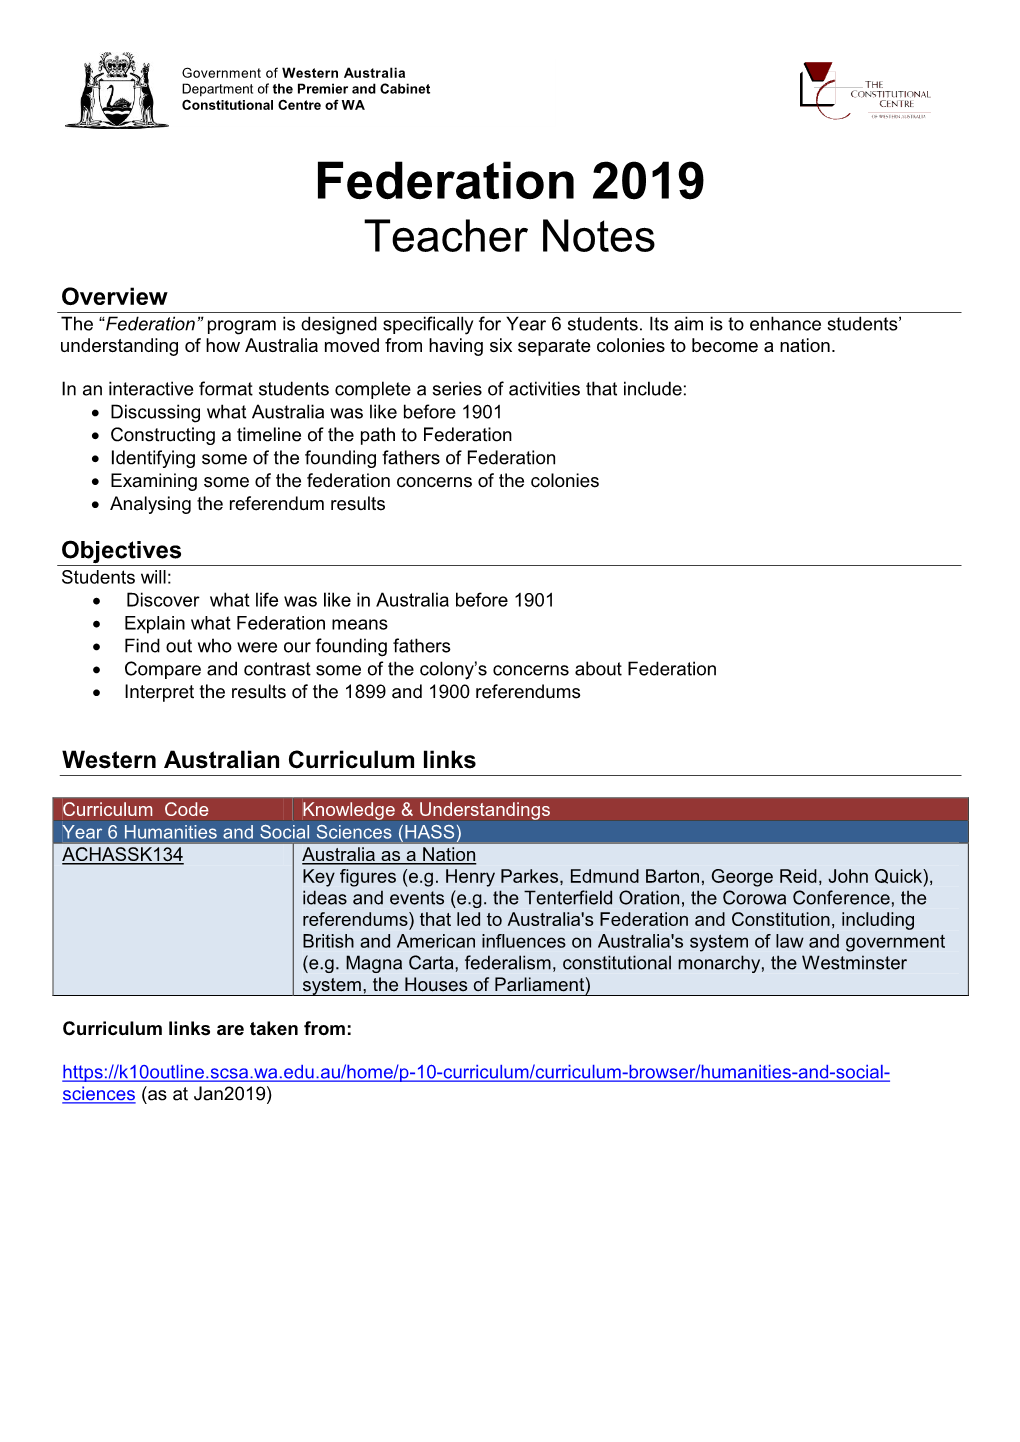 Federation 2019 Teacher Notes